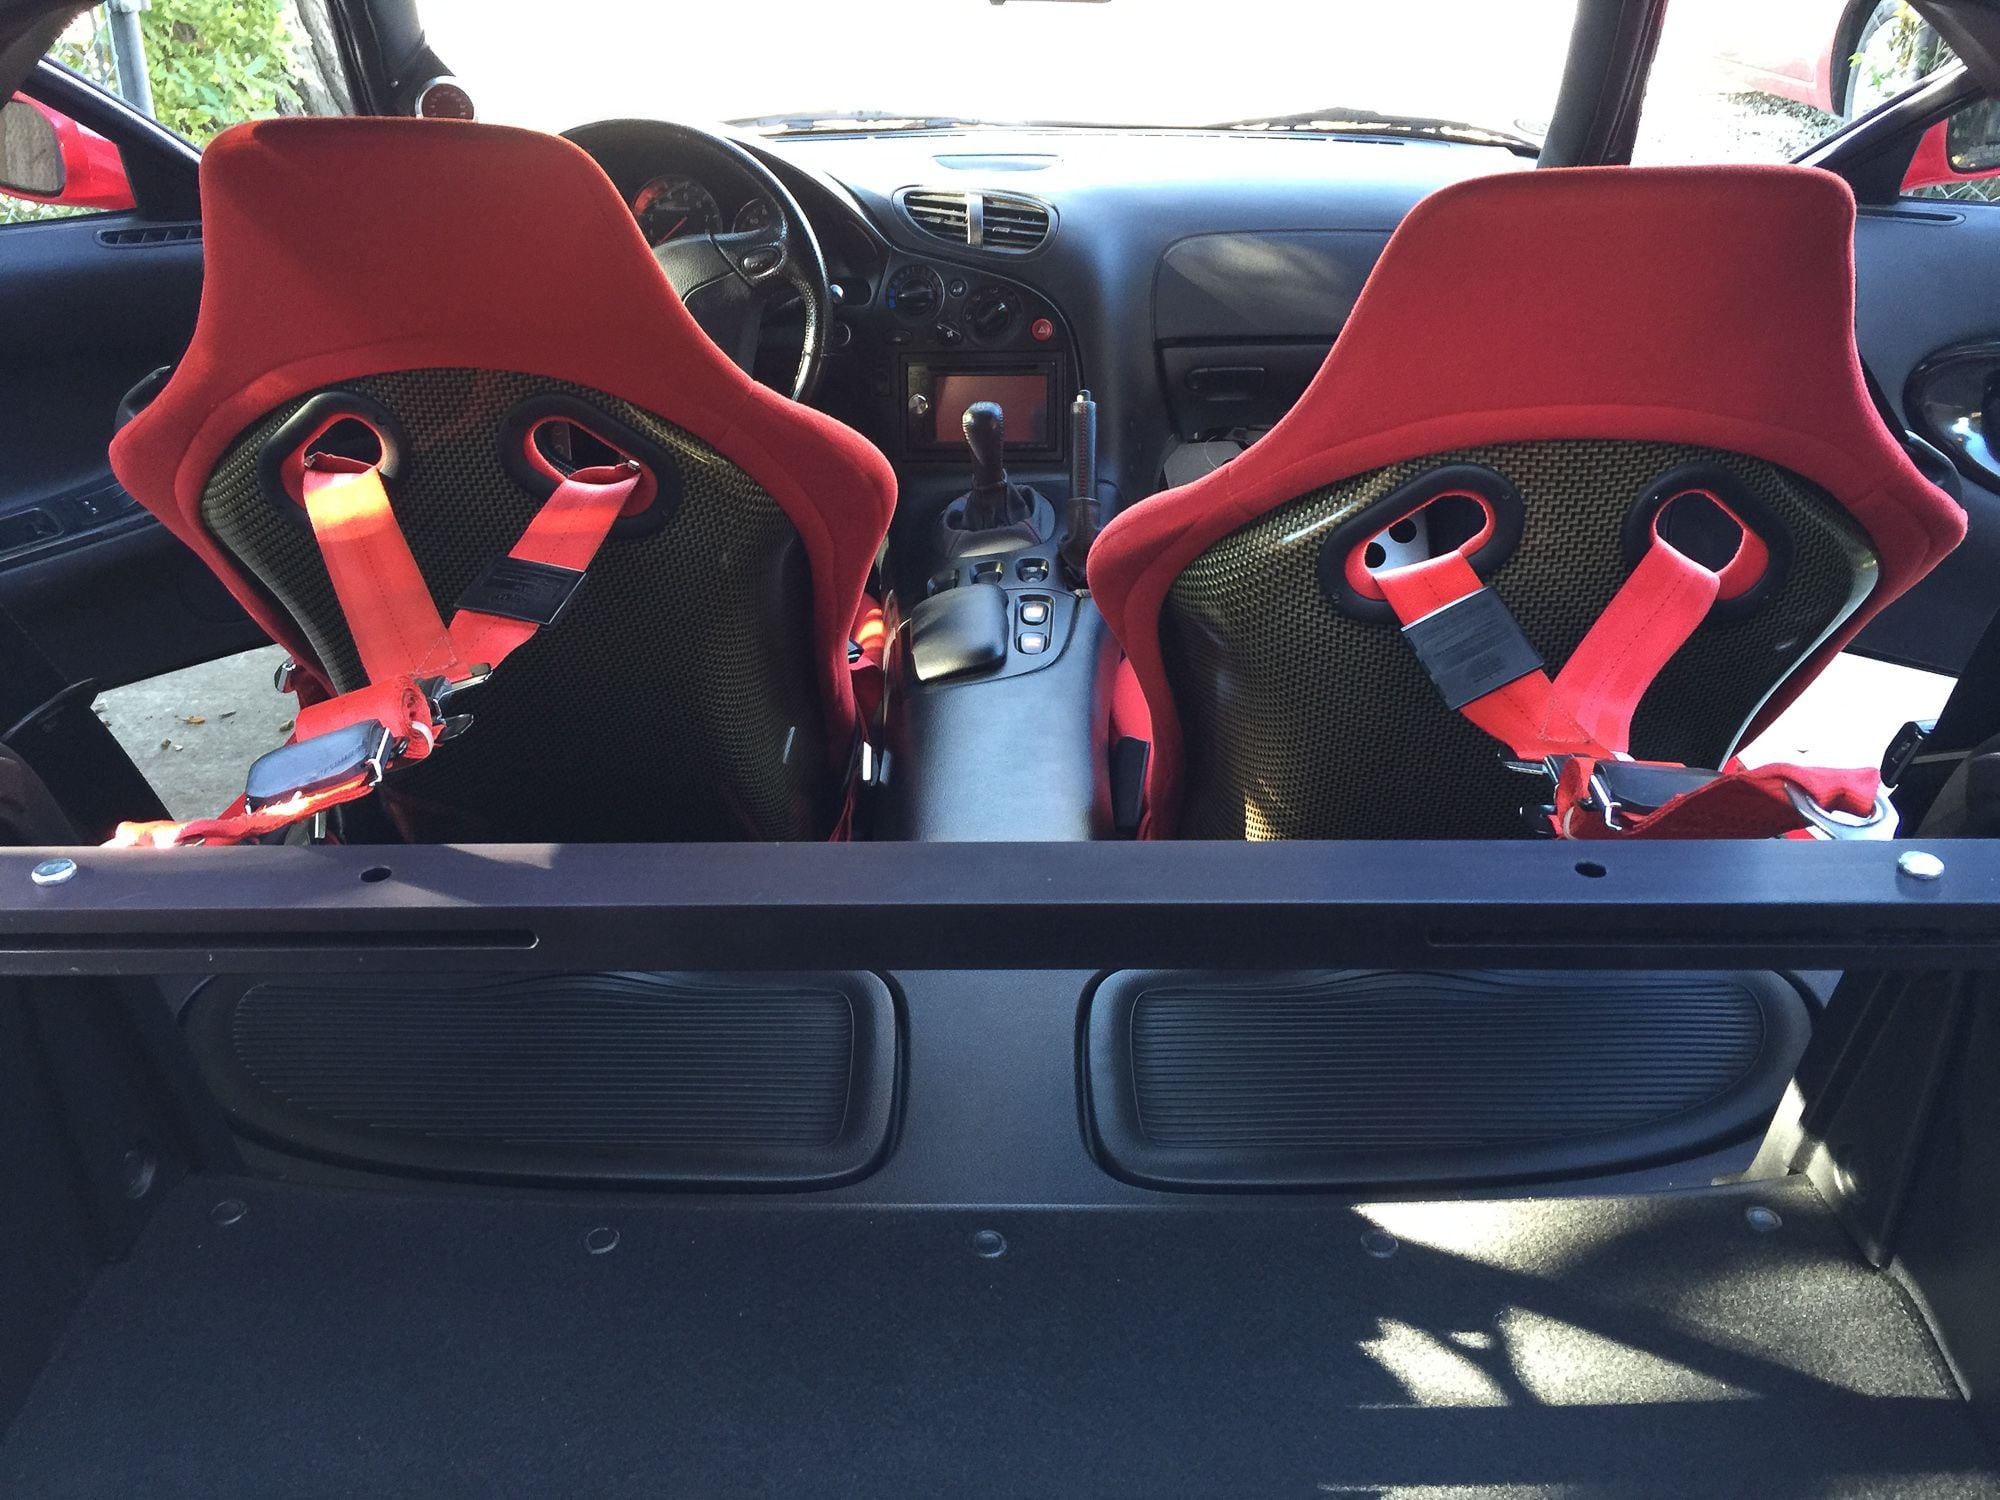 Interior/Upholstery - Axiom Advanced Harness Bar - Used - 1993 to 2001 Mazda RX-7 - Menlo Park, CA 94025, United States